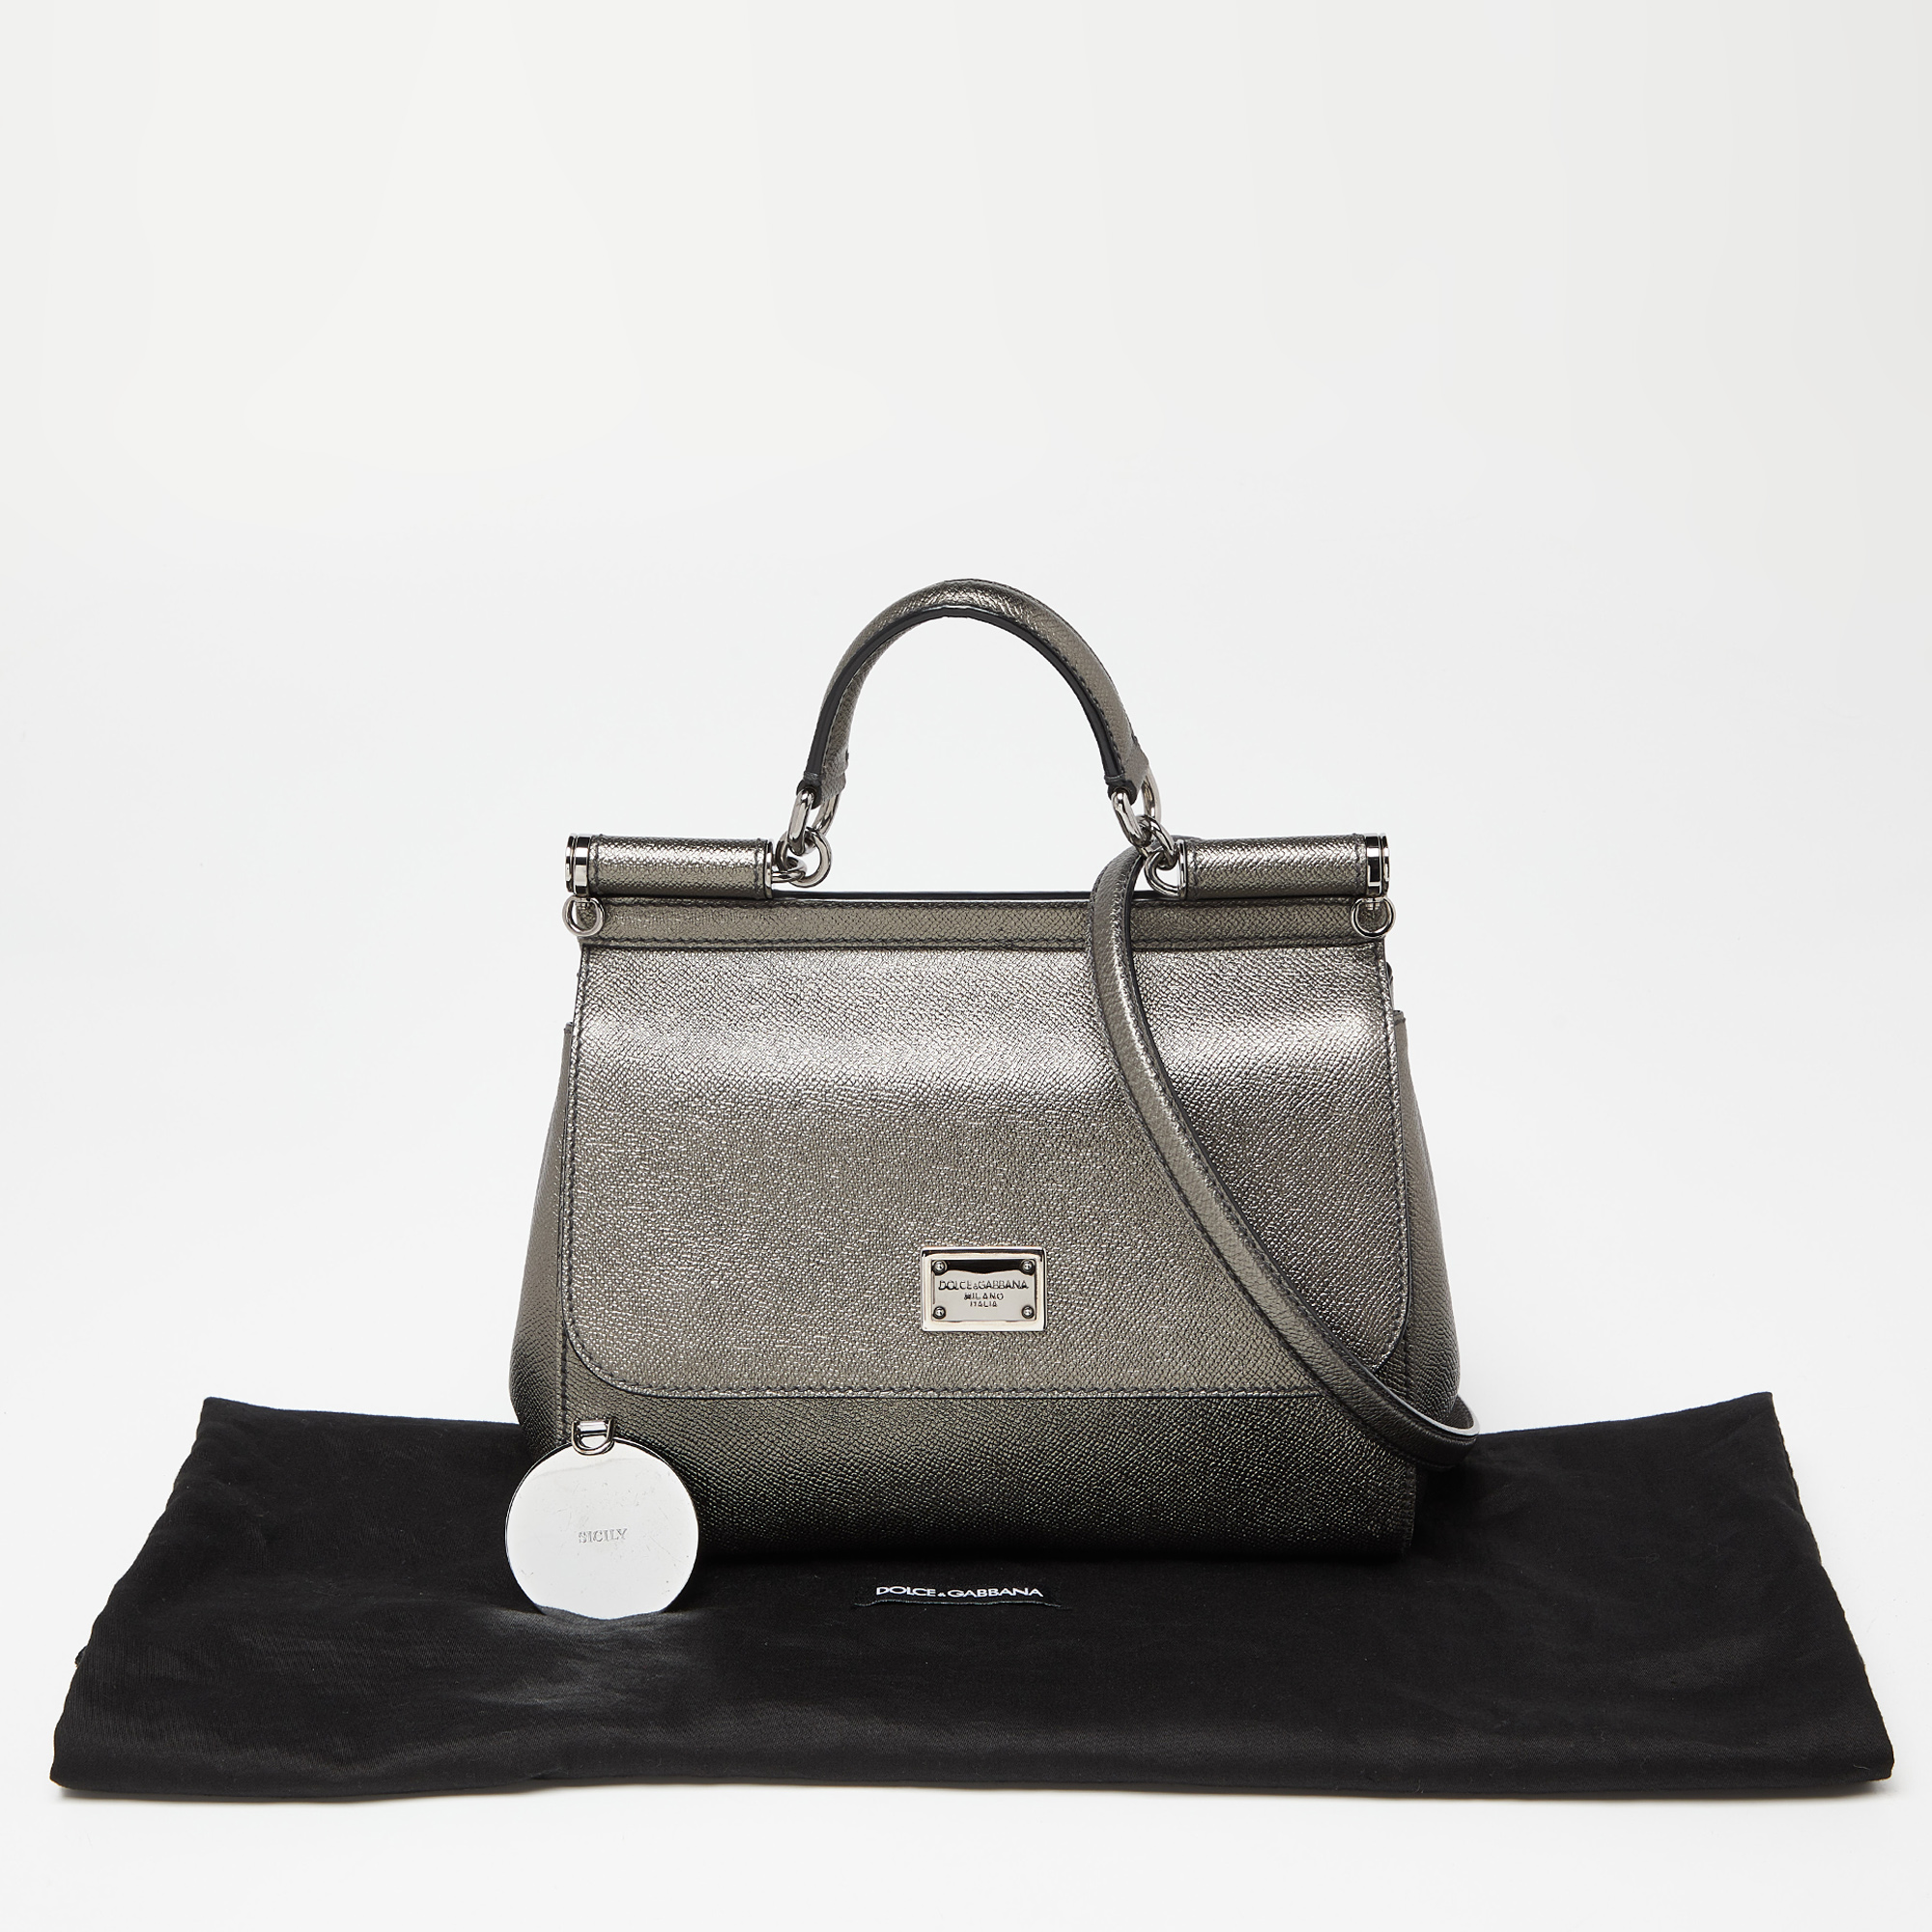 Dolce & Gabbana Metallic Leather Medium Miss Sicily Top Handle Bag